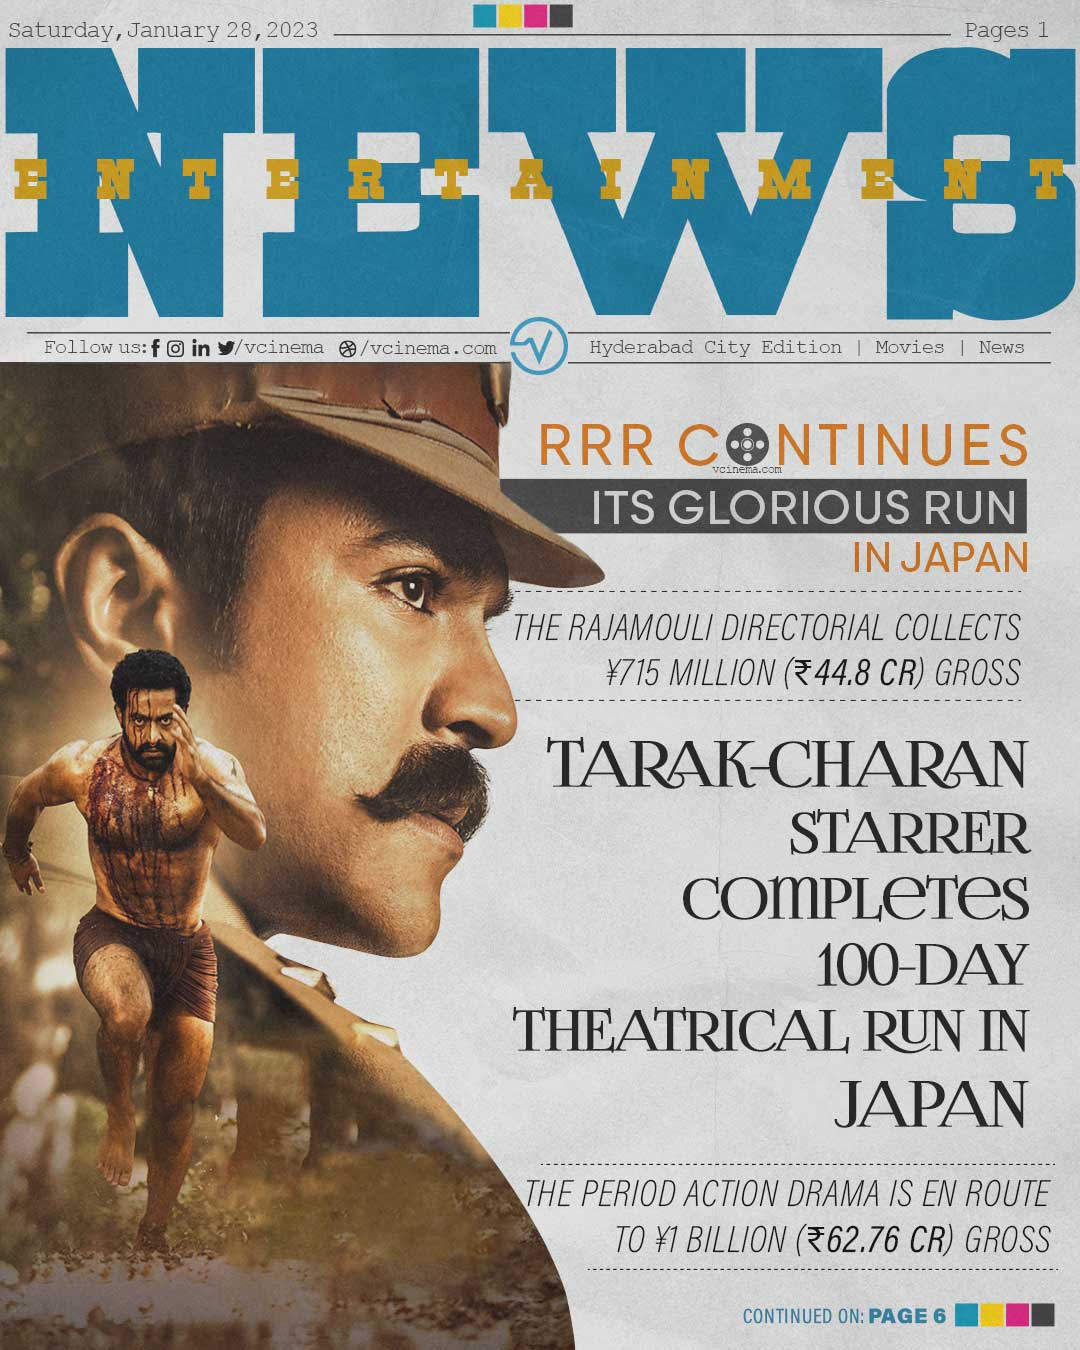 rrr movie 100 days in japan